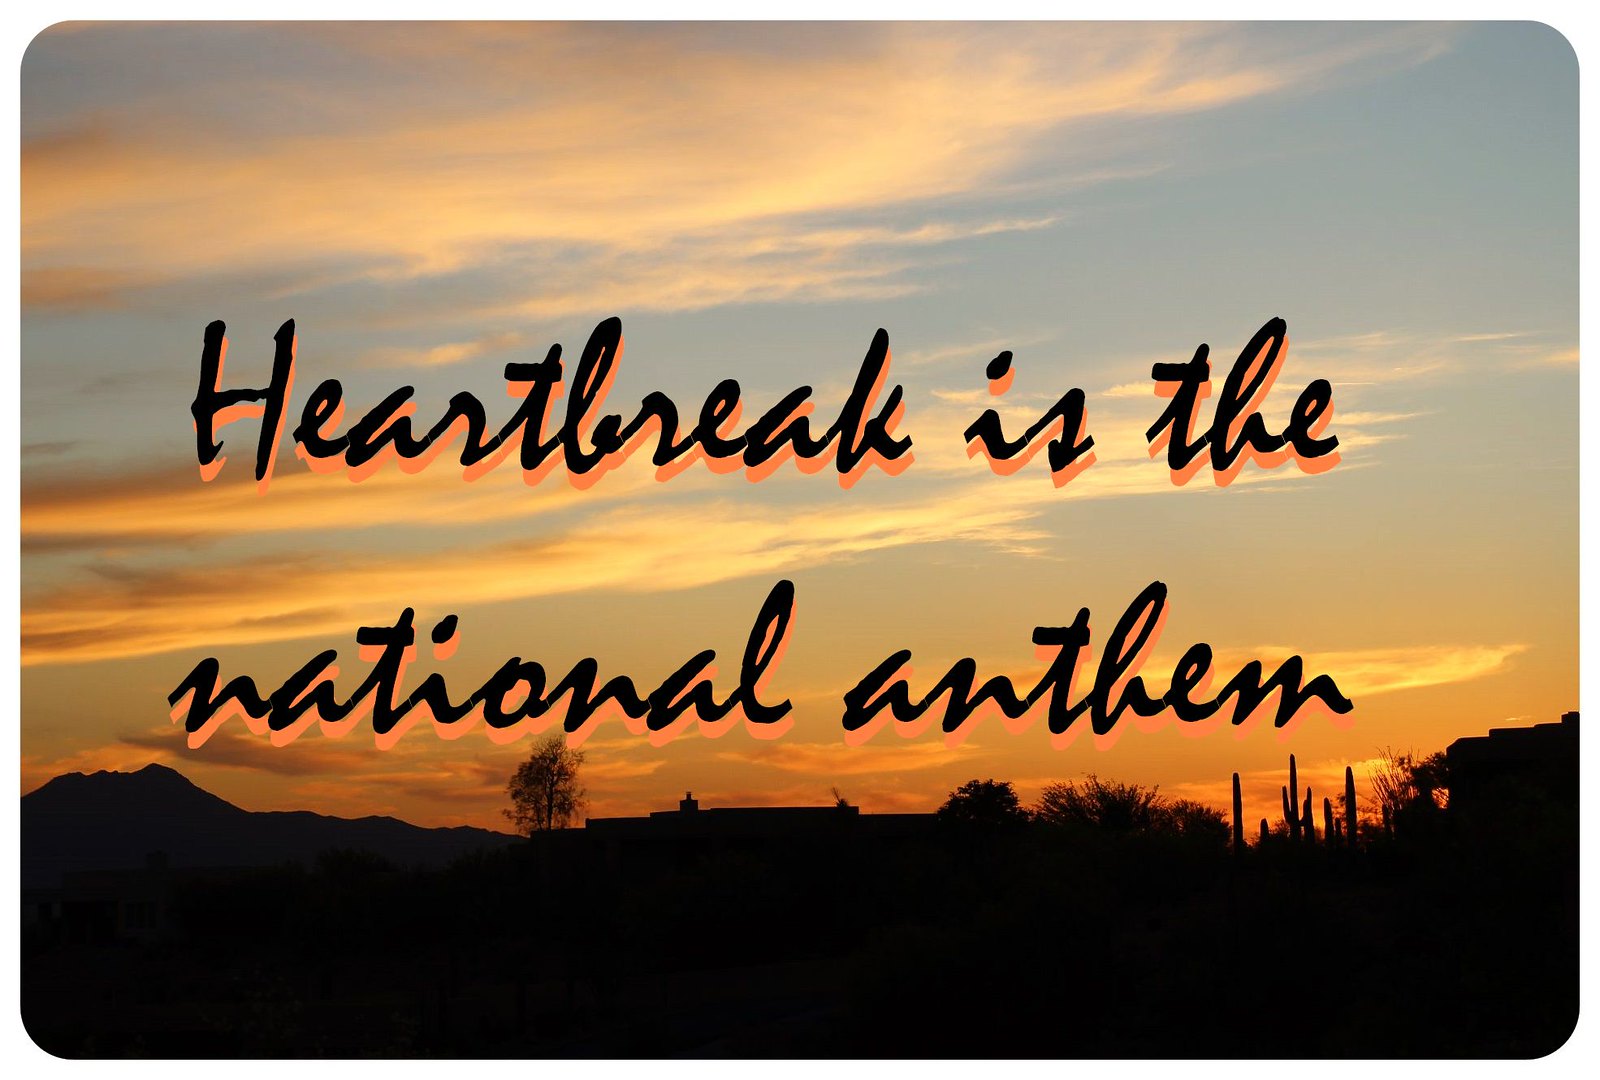 heartbreak is the national anthem